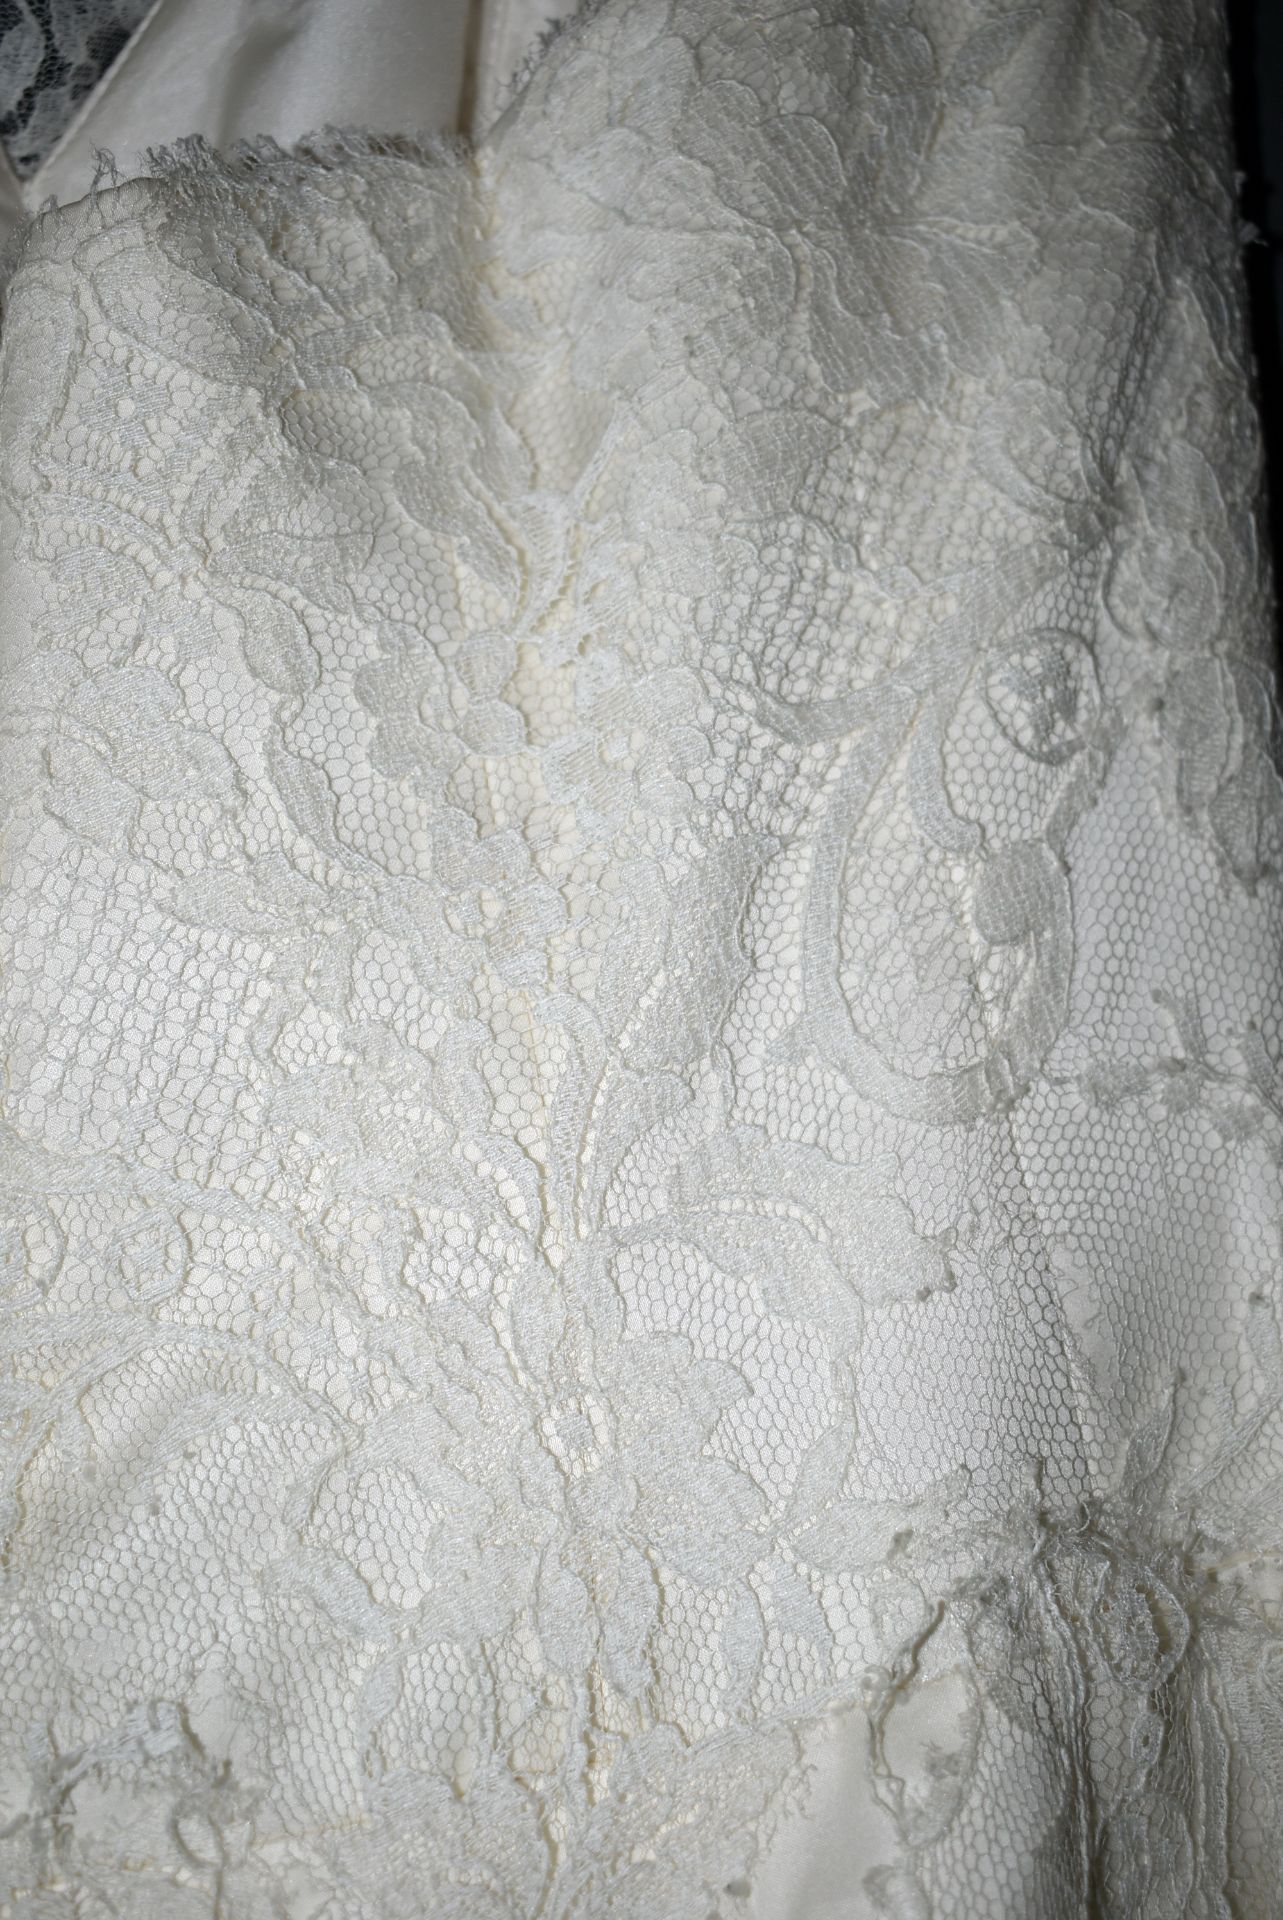 1 x ALAN HANNAH Strapless Lace & Satin Fishtail Dress Designer Wedding Dress Bridal RRP £2,700 UK 14 - Image 5 of 7